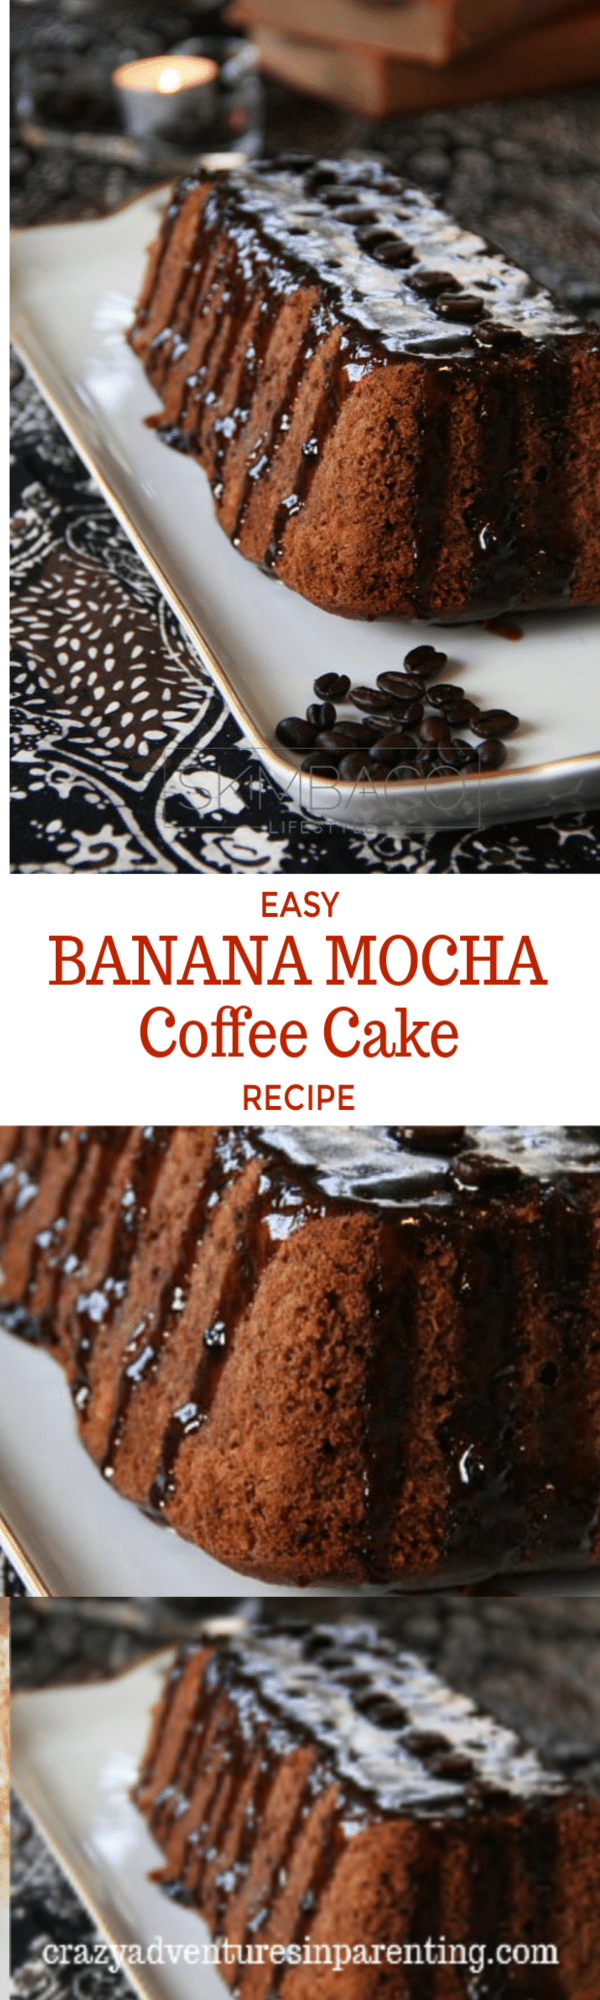 Easy Banana Mocha Coffee Cake Recipe